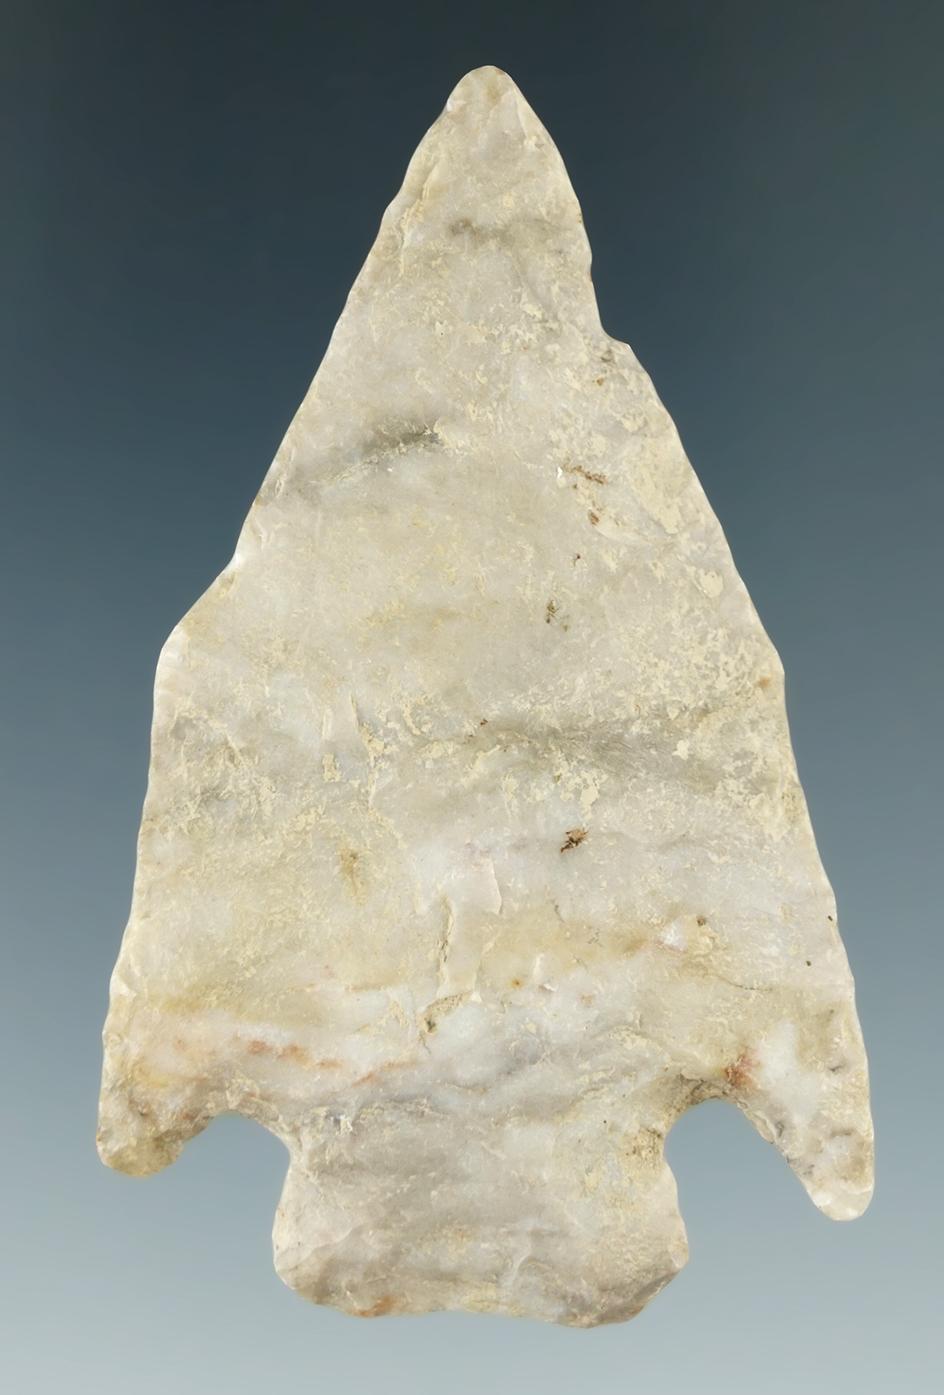 2 7/16" Classic Style Pentagonal found on Indian Hollow Rd., Grafton, Lorain Co., Ohio.